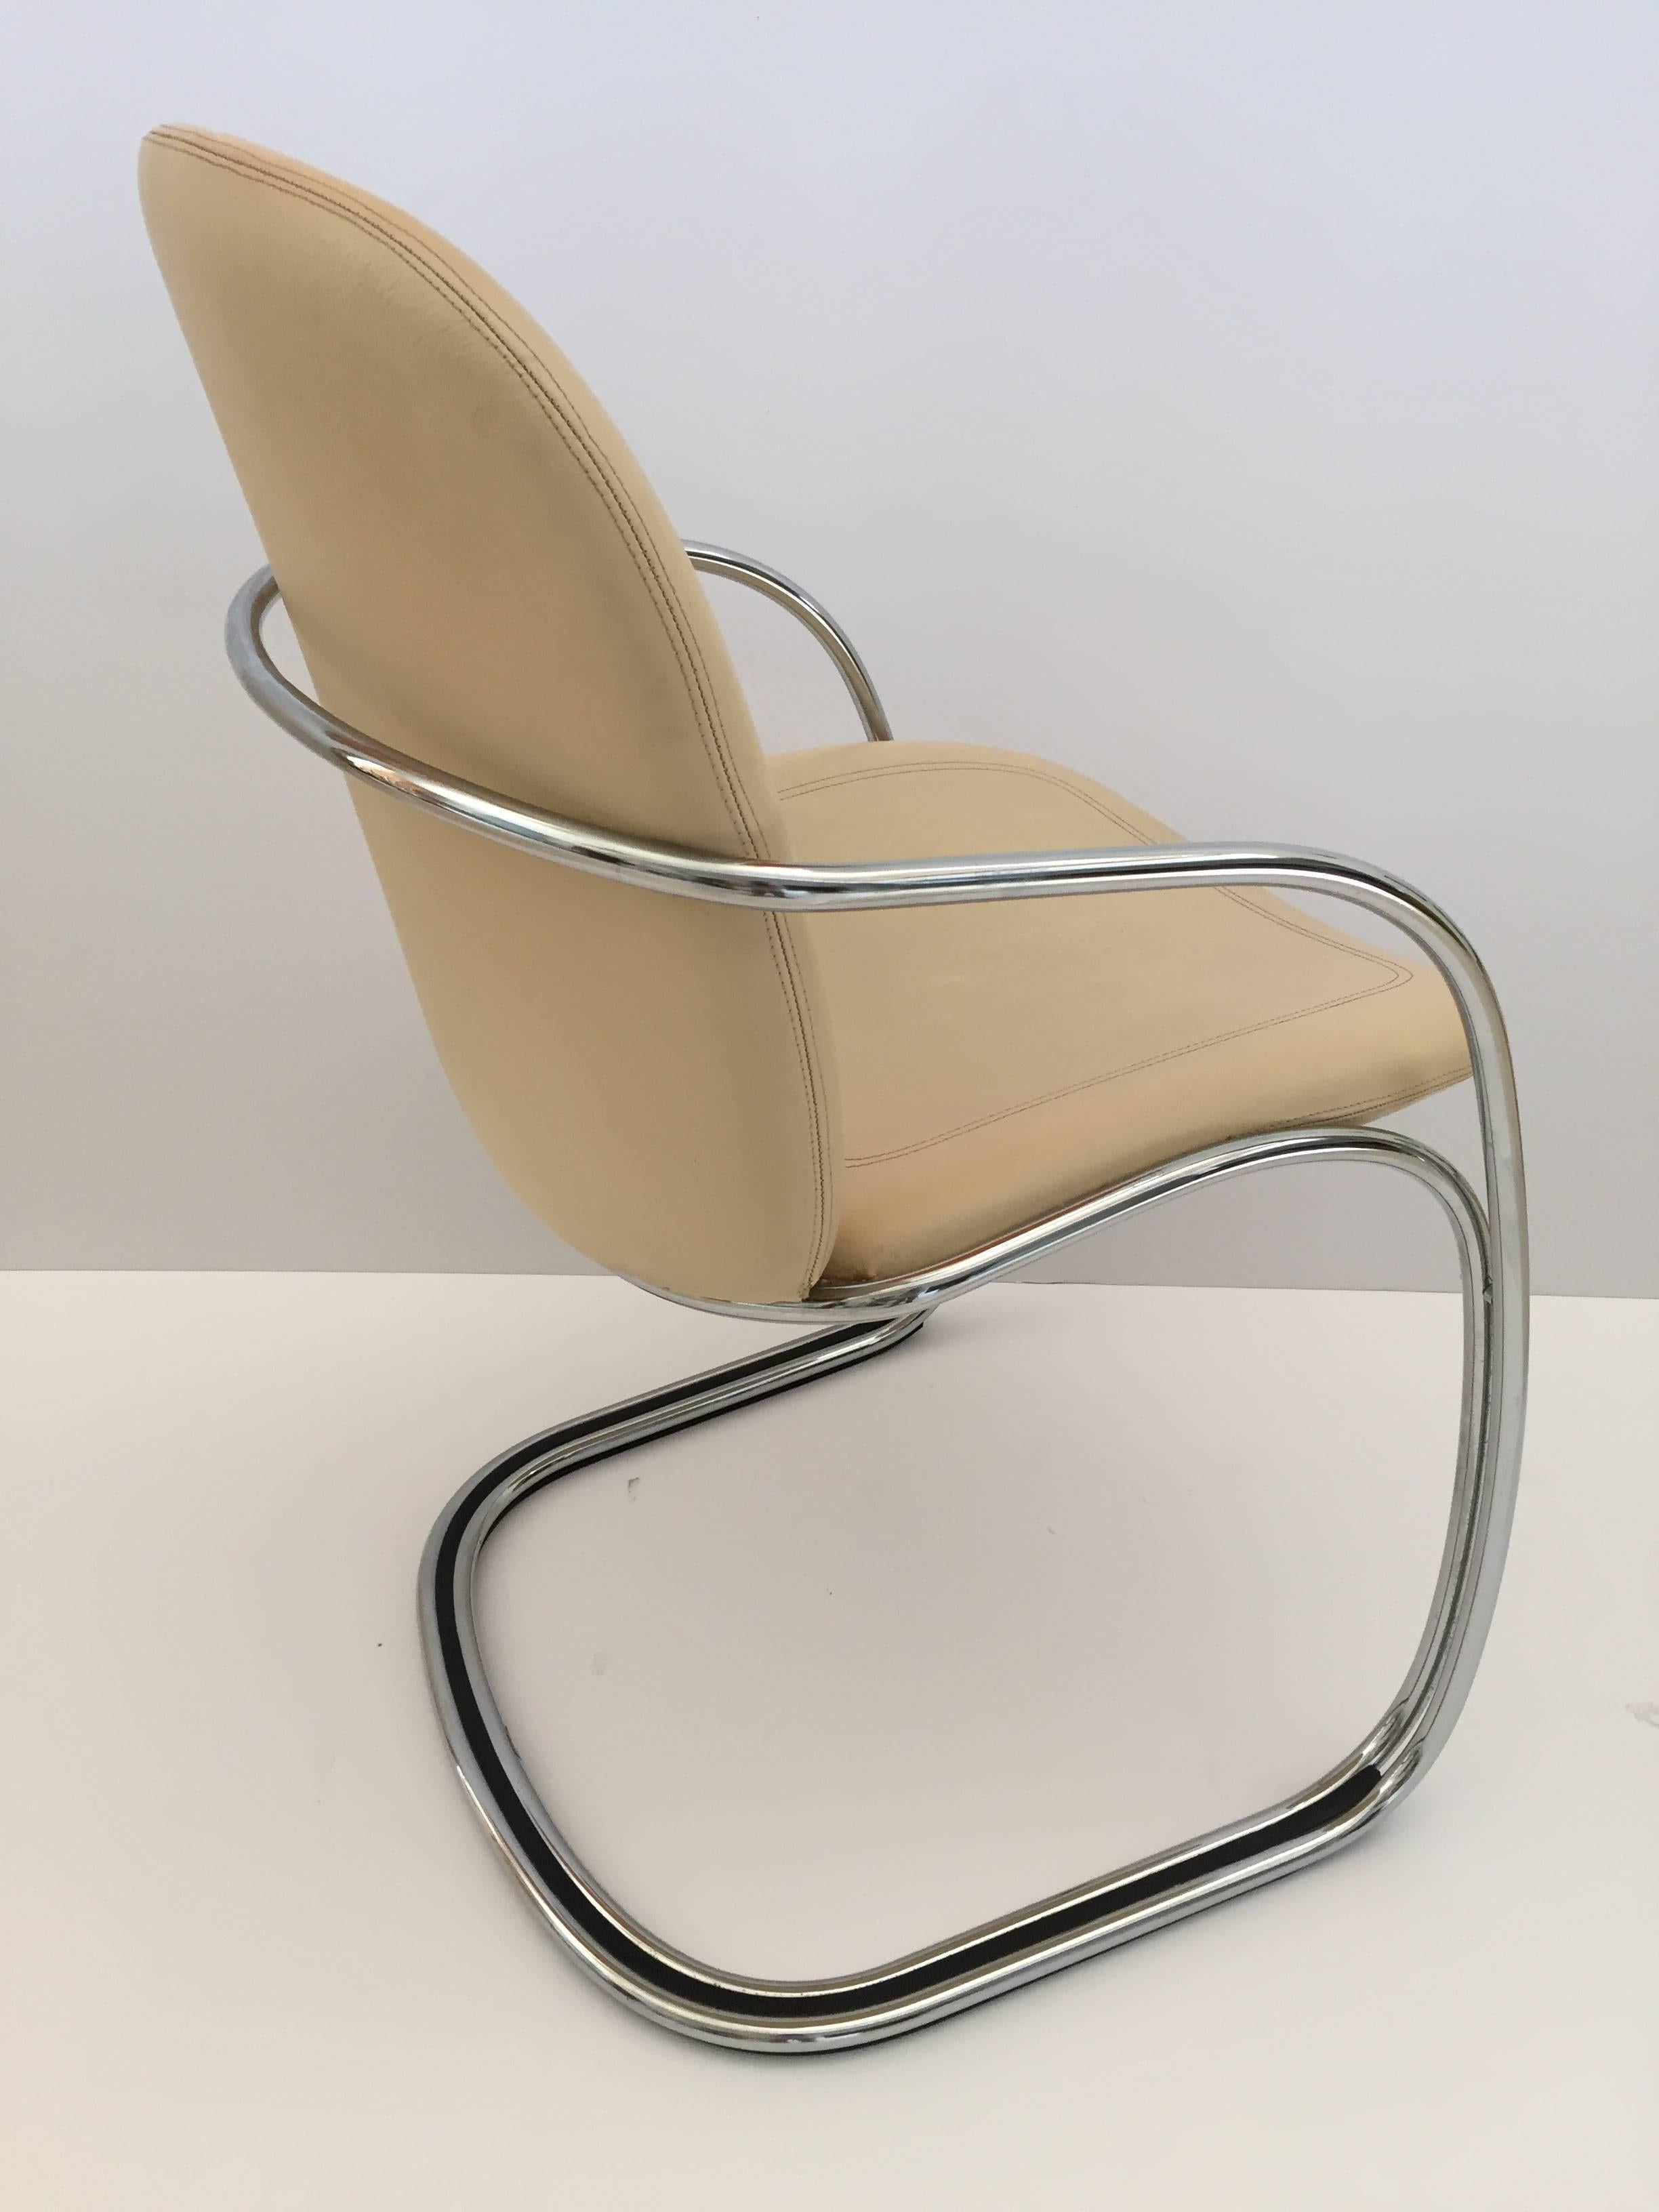 20th Century Italian Chrome and Leather Chairs, by Gastone Rinaldi for RIMA, circa 1970s